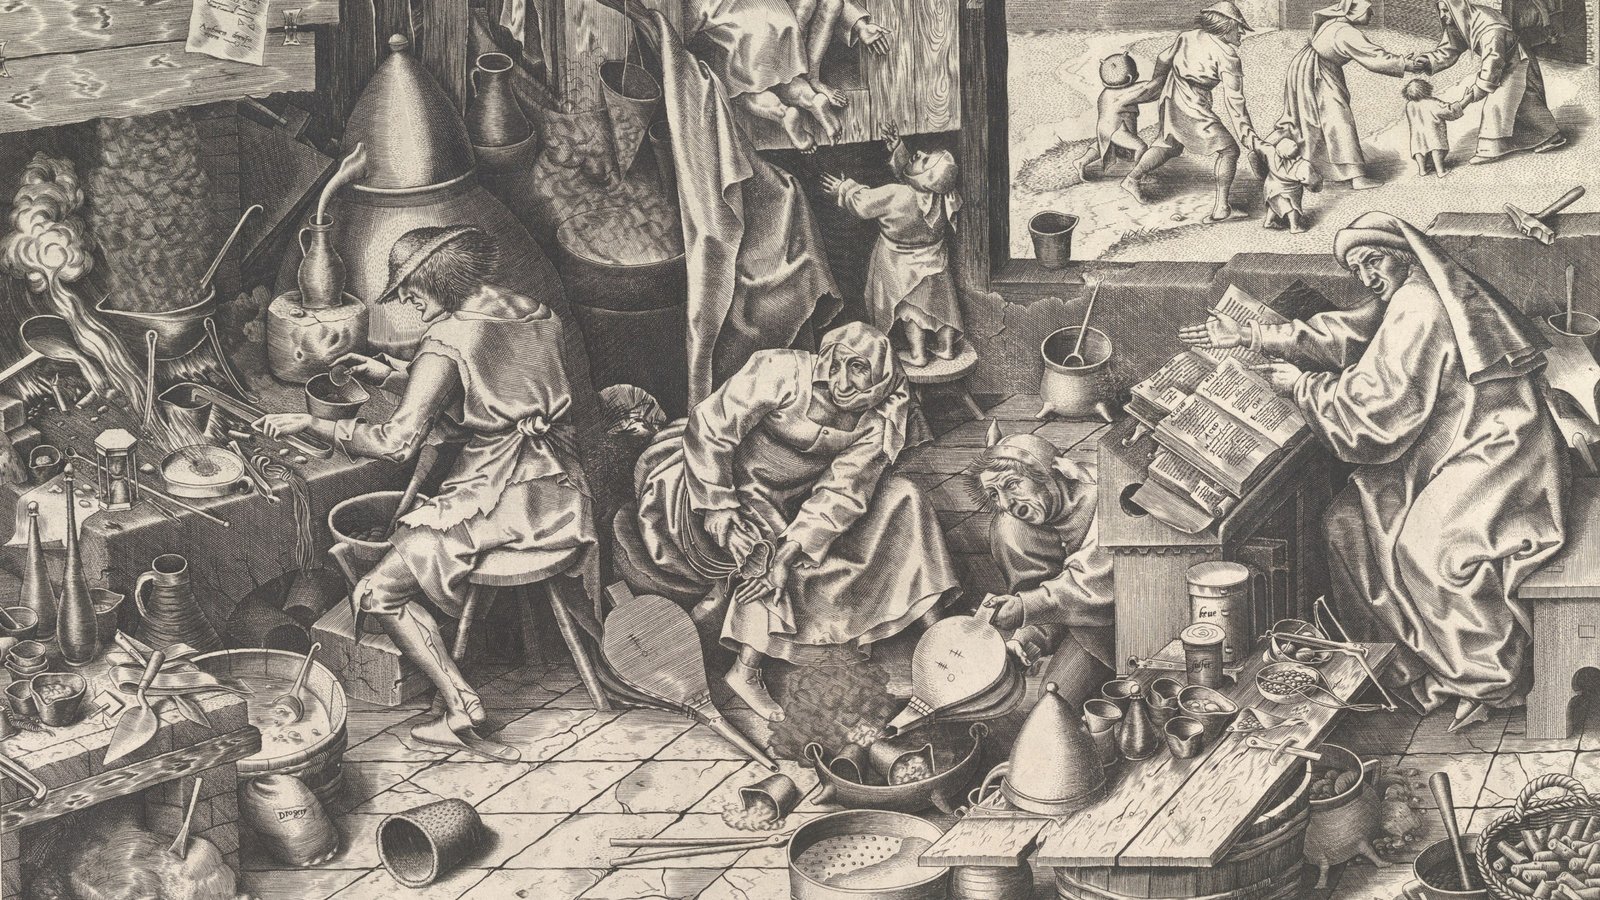 A lecture by Stanislav Gavrilenko: "Pieter Bruegel the Elder, John Law, and Sociology of Complexity."